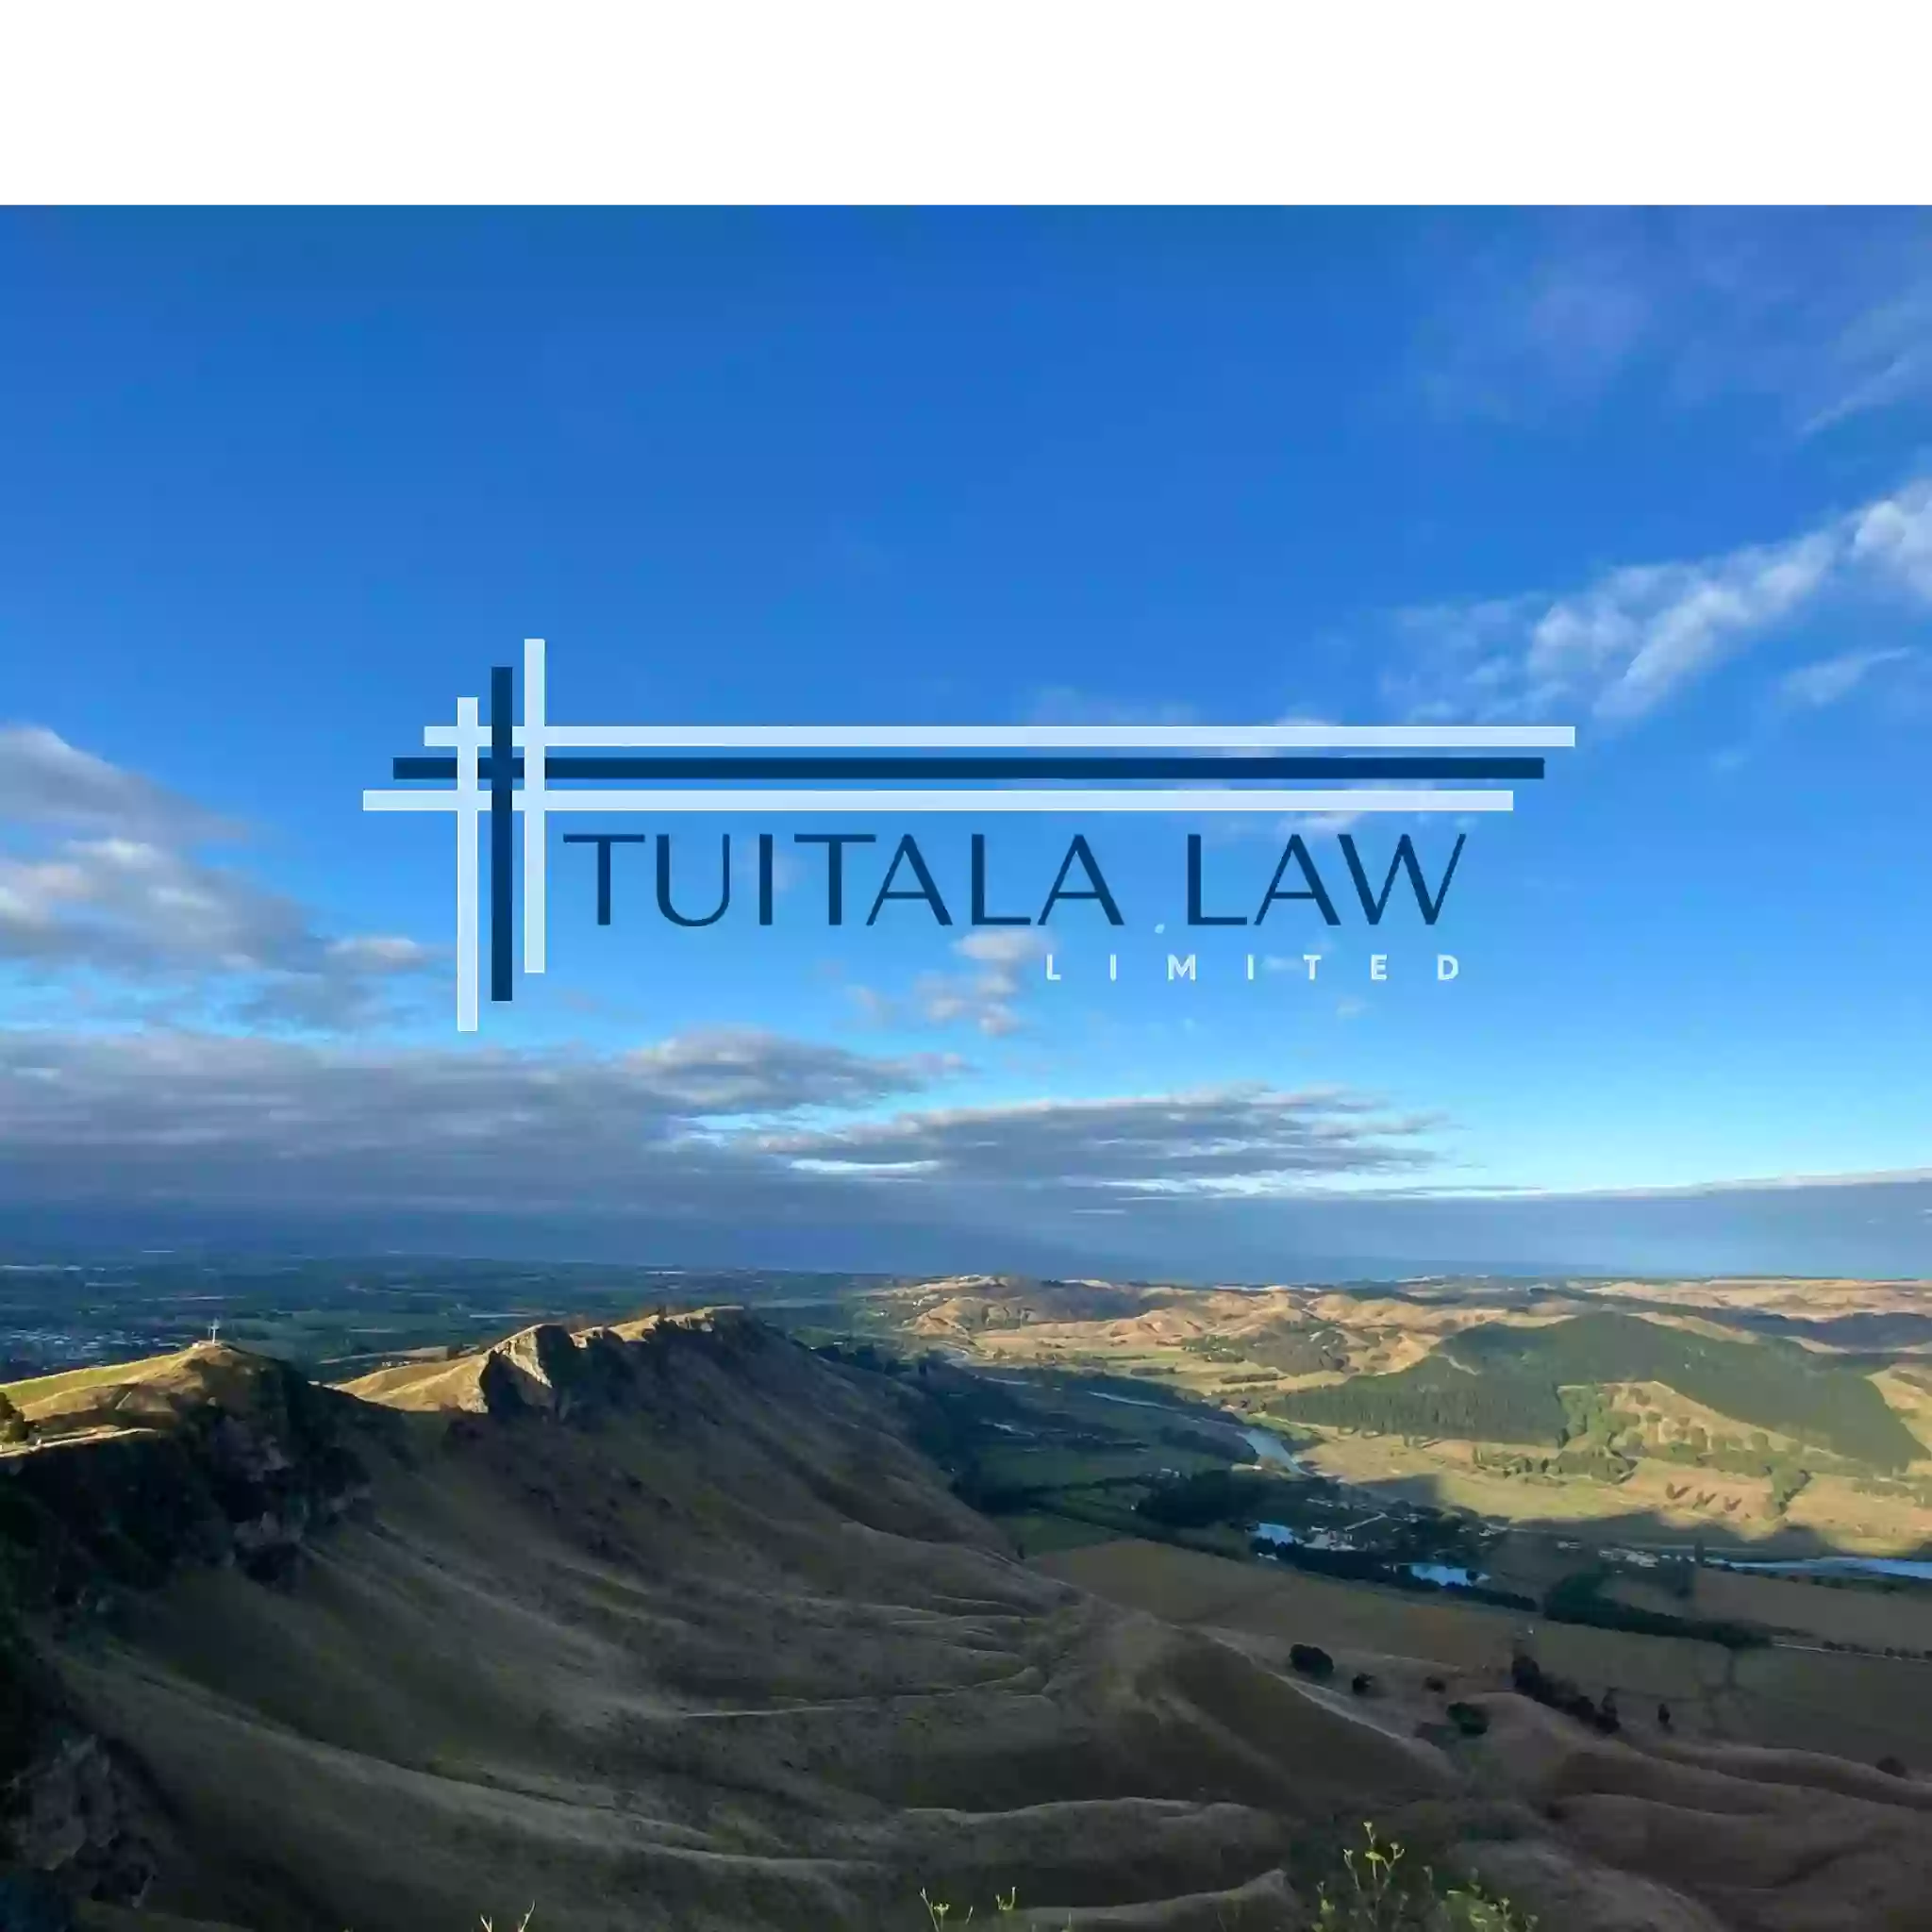 Tuitala Law Limited